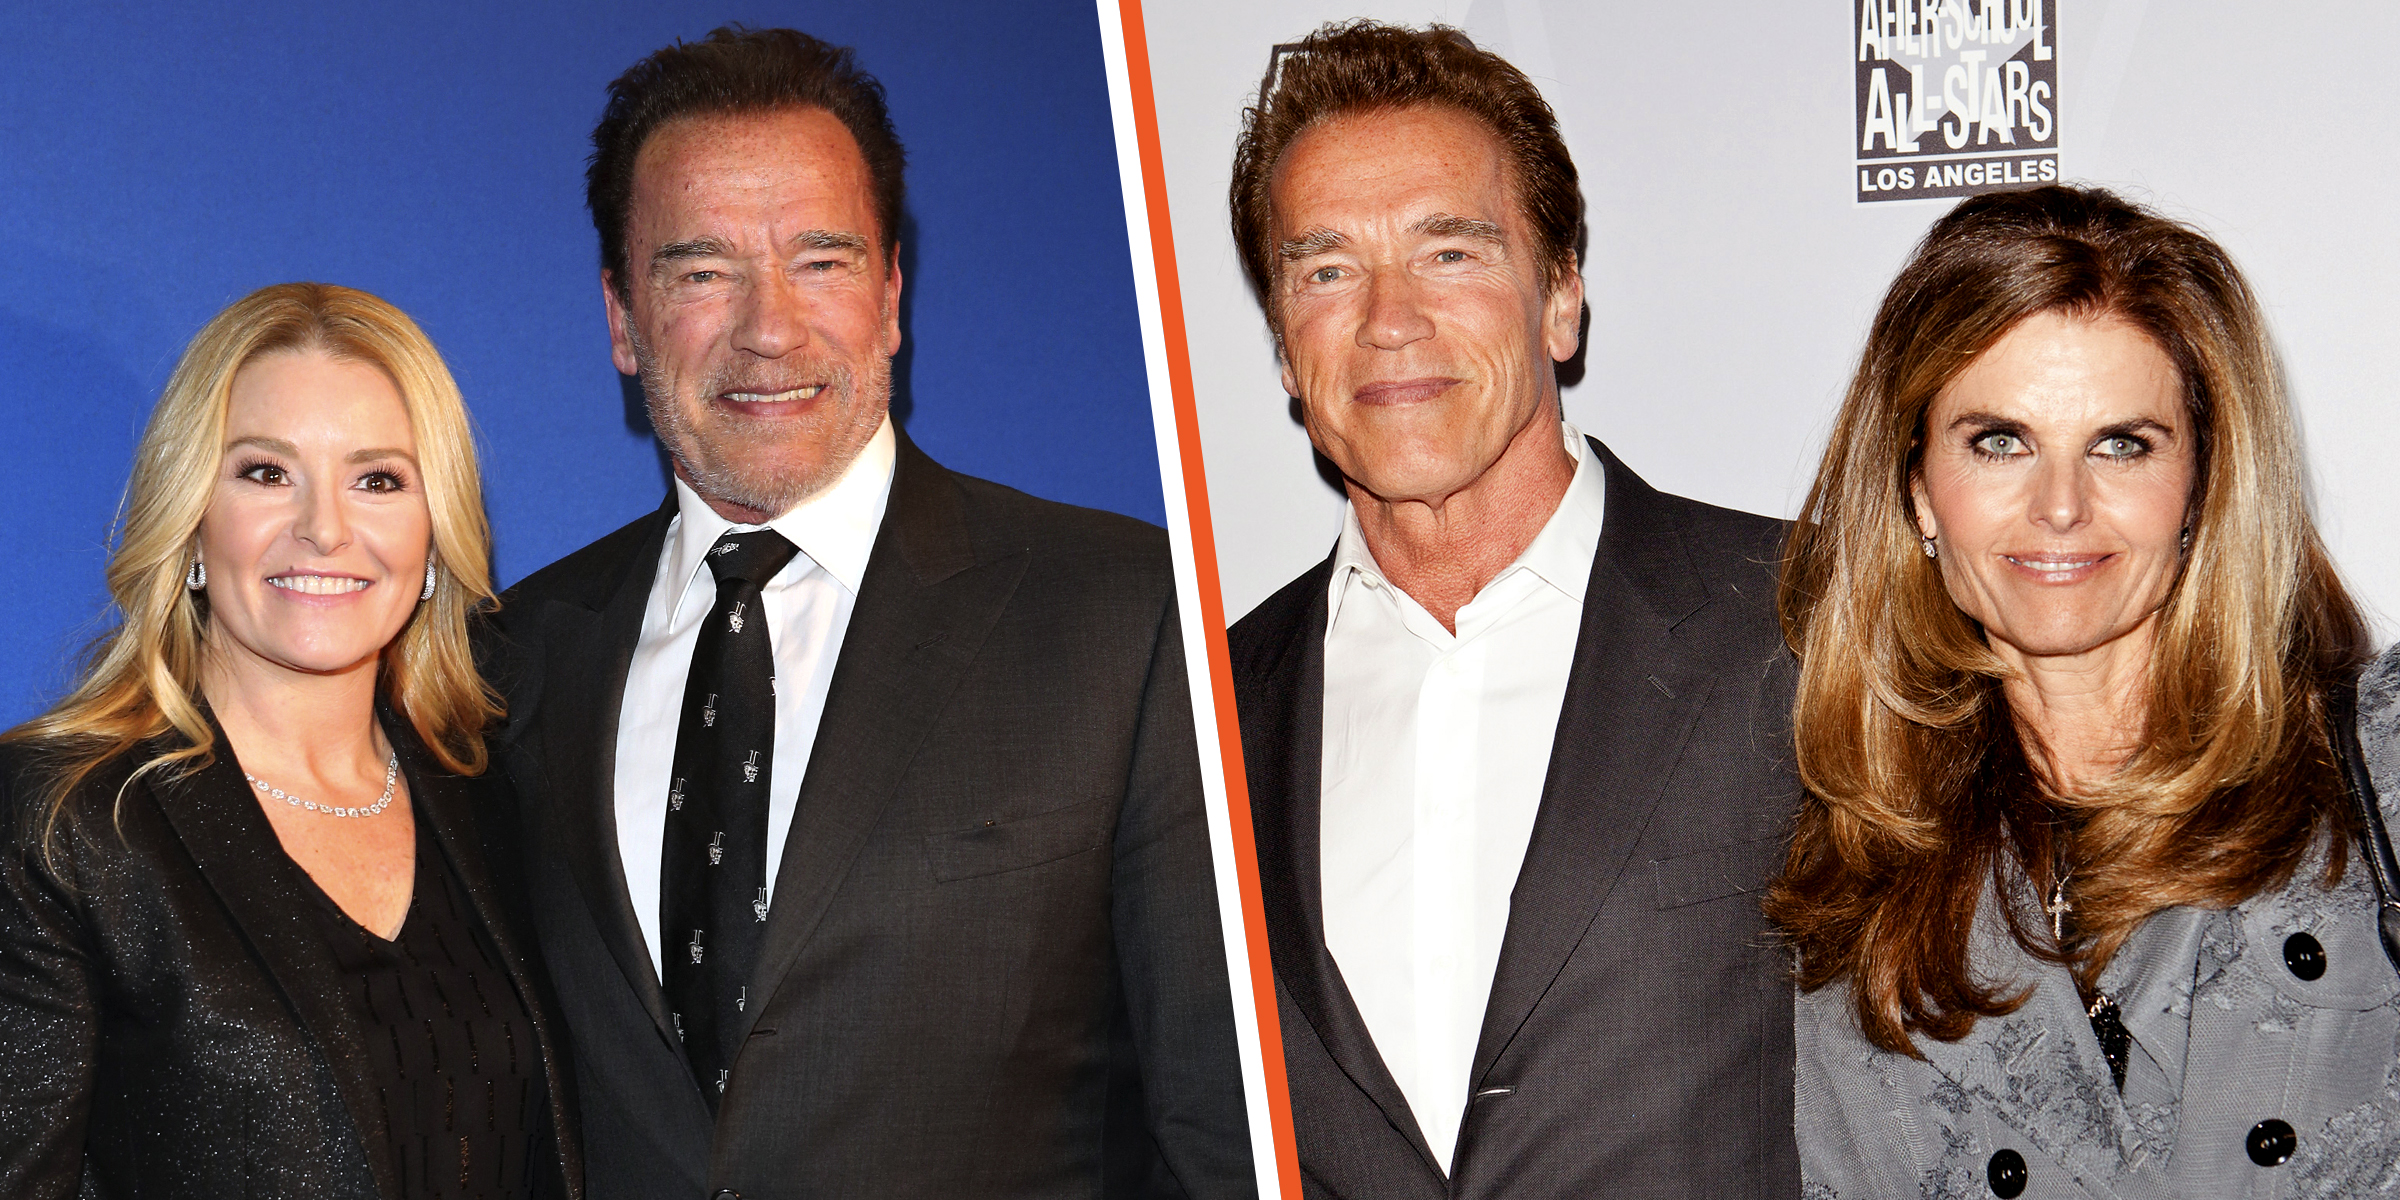 Arnold Schwarzenegger and Heather Milligan | Arnold Schwarzenegger and Maria Shriver | Source Getty Images